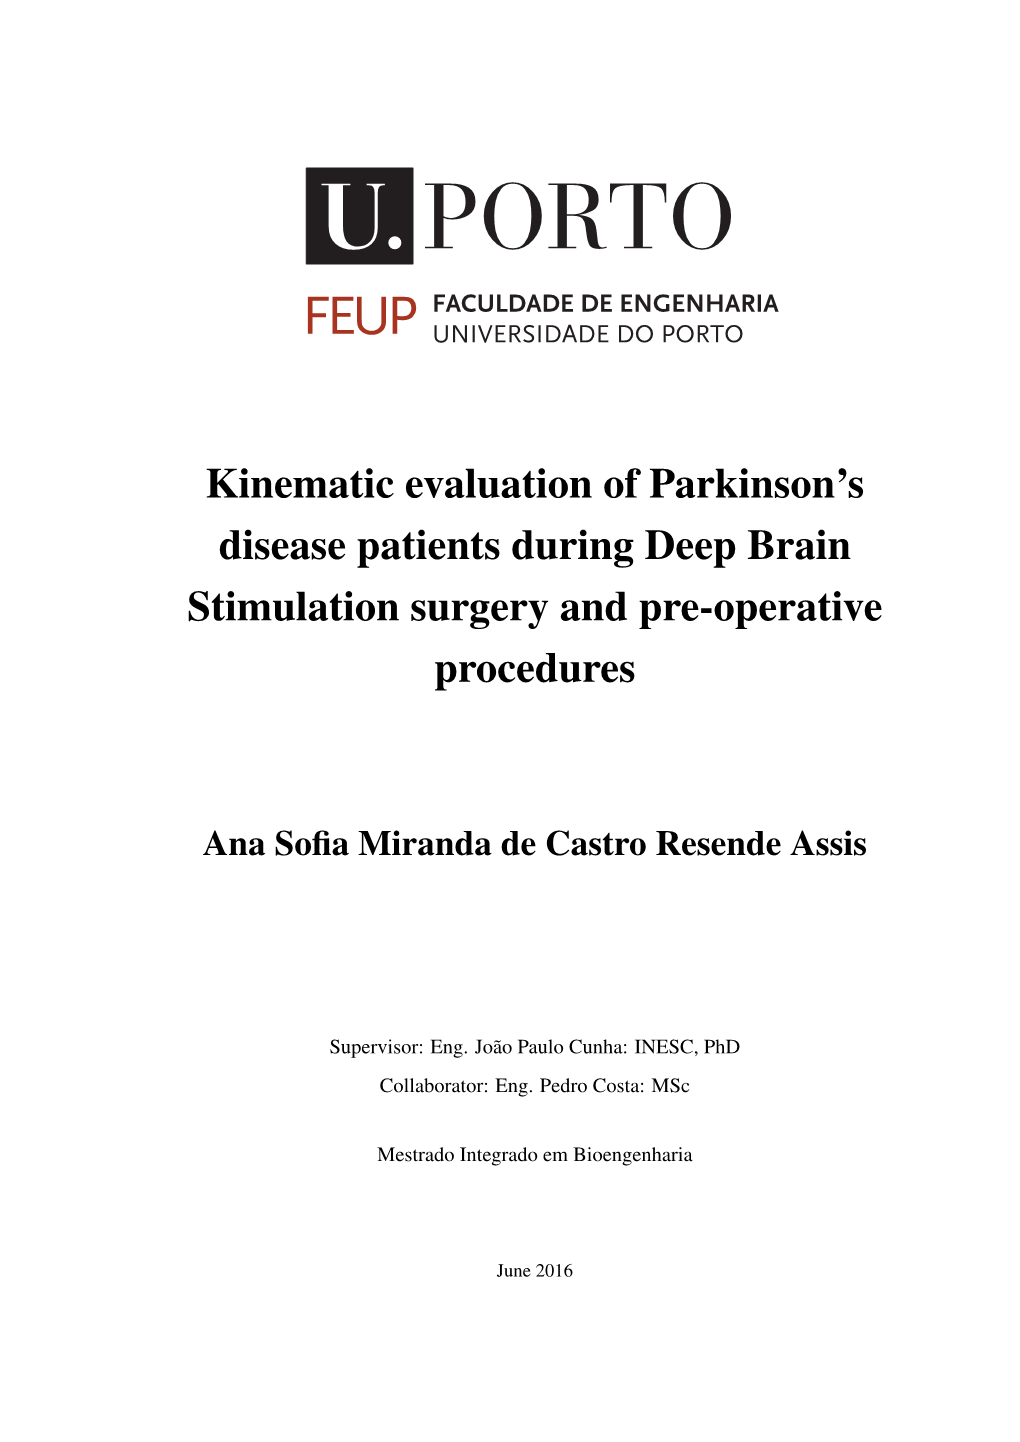 Kinematic Evaluation of Parkinson's Disease Patients During Deep Brain